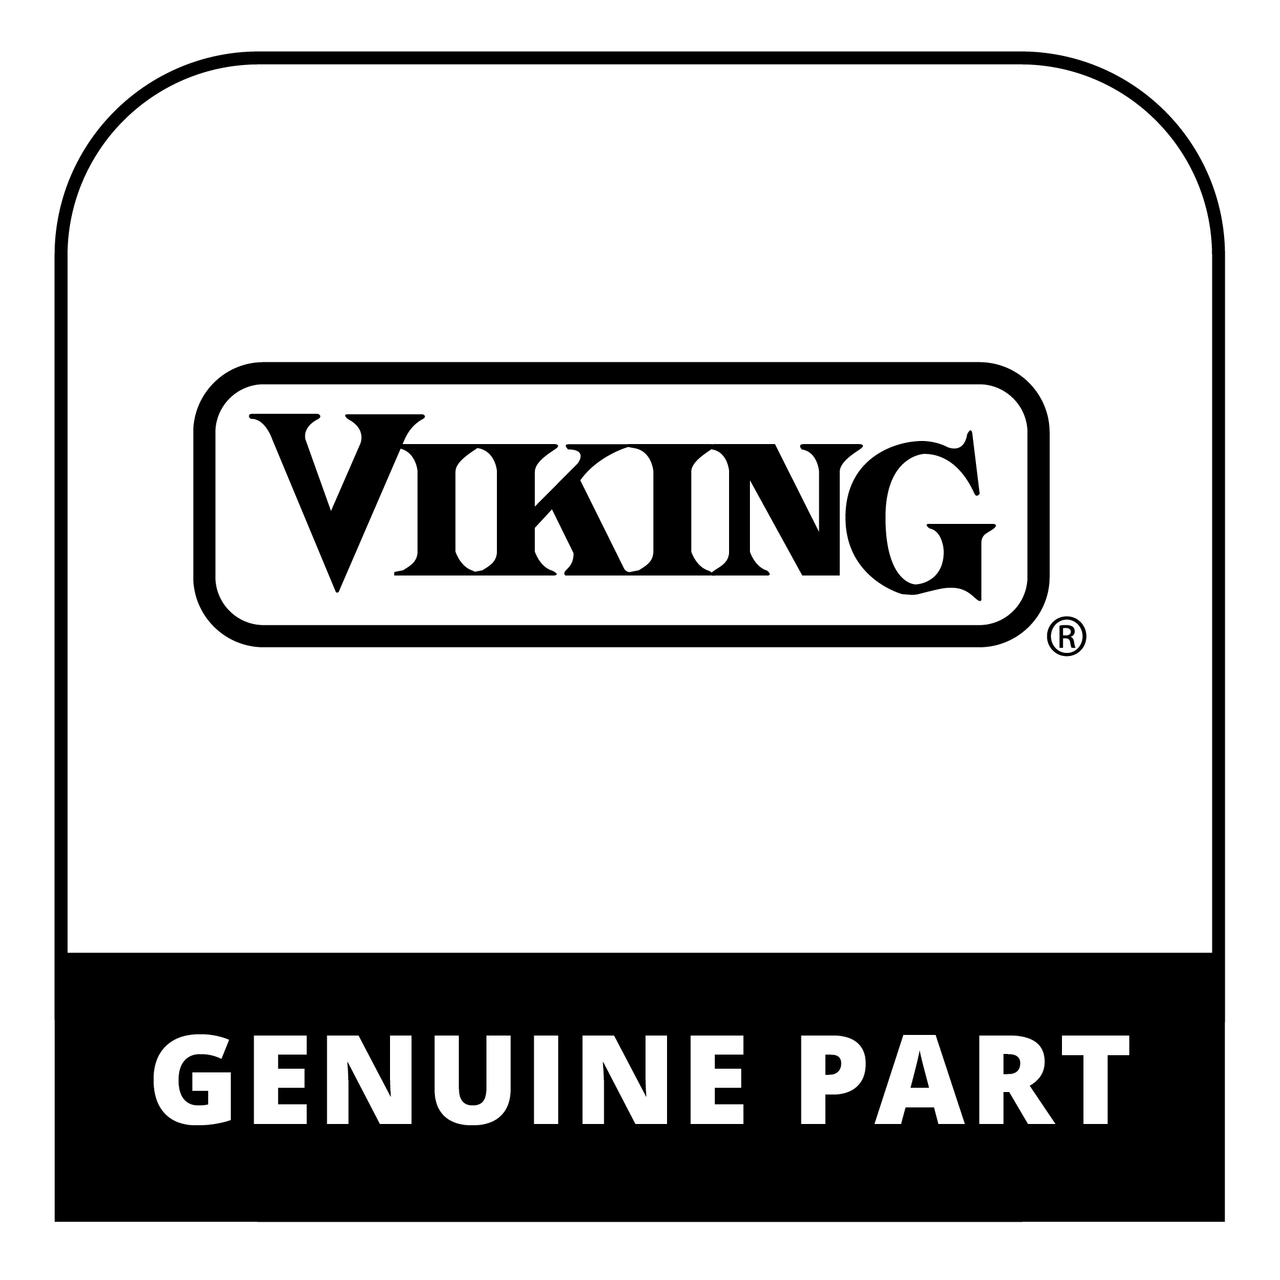 Viking PE120035 - NUT LOCK 10-24 31750120 - Genuine Viking Part